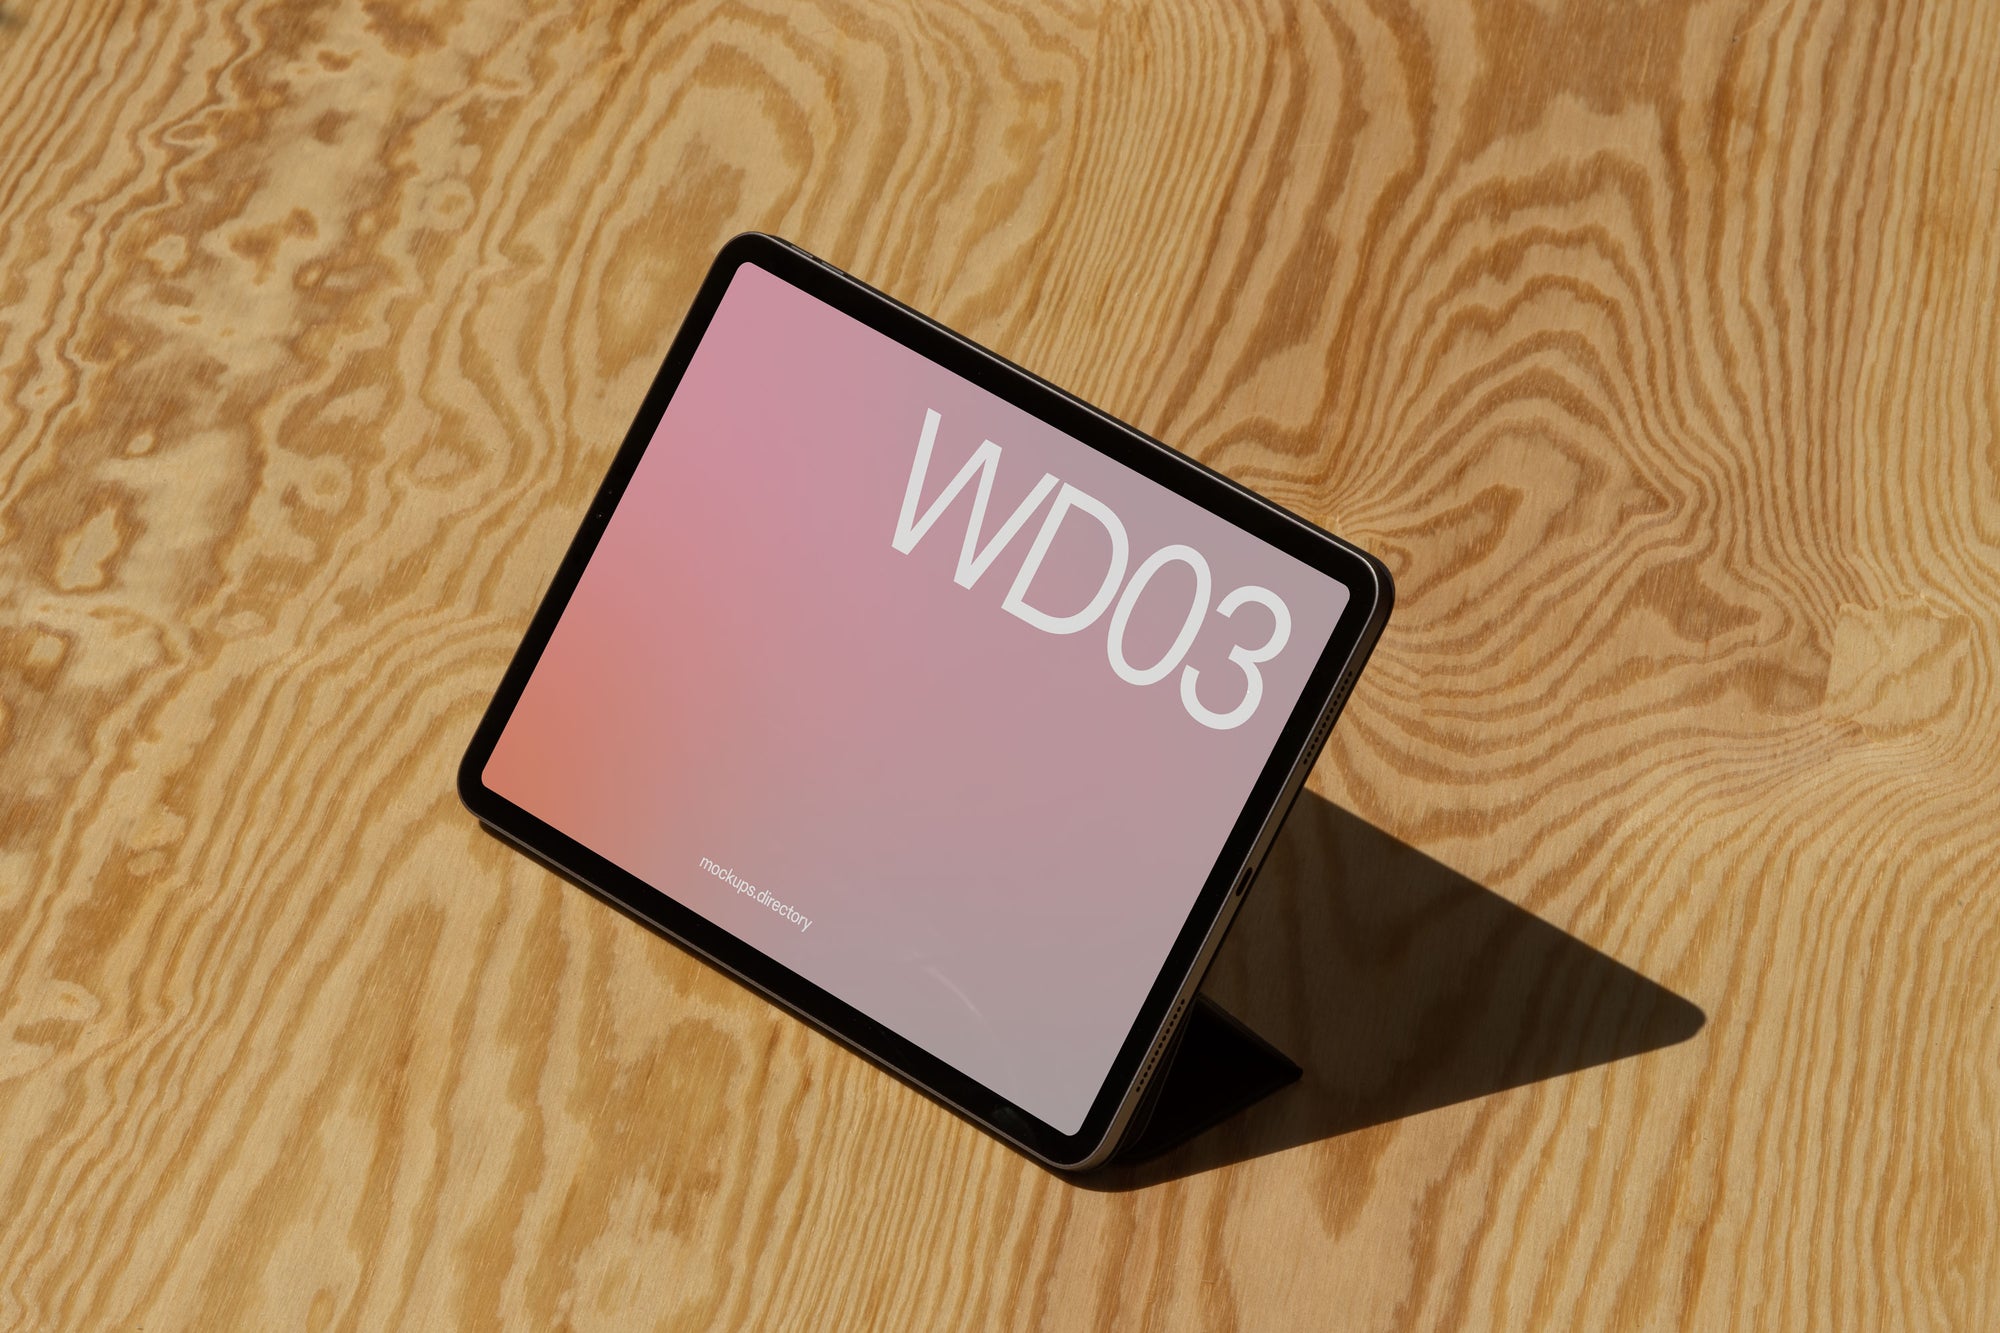 WD03 — iPad Pro